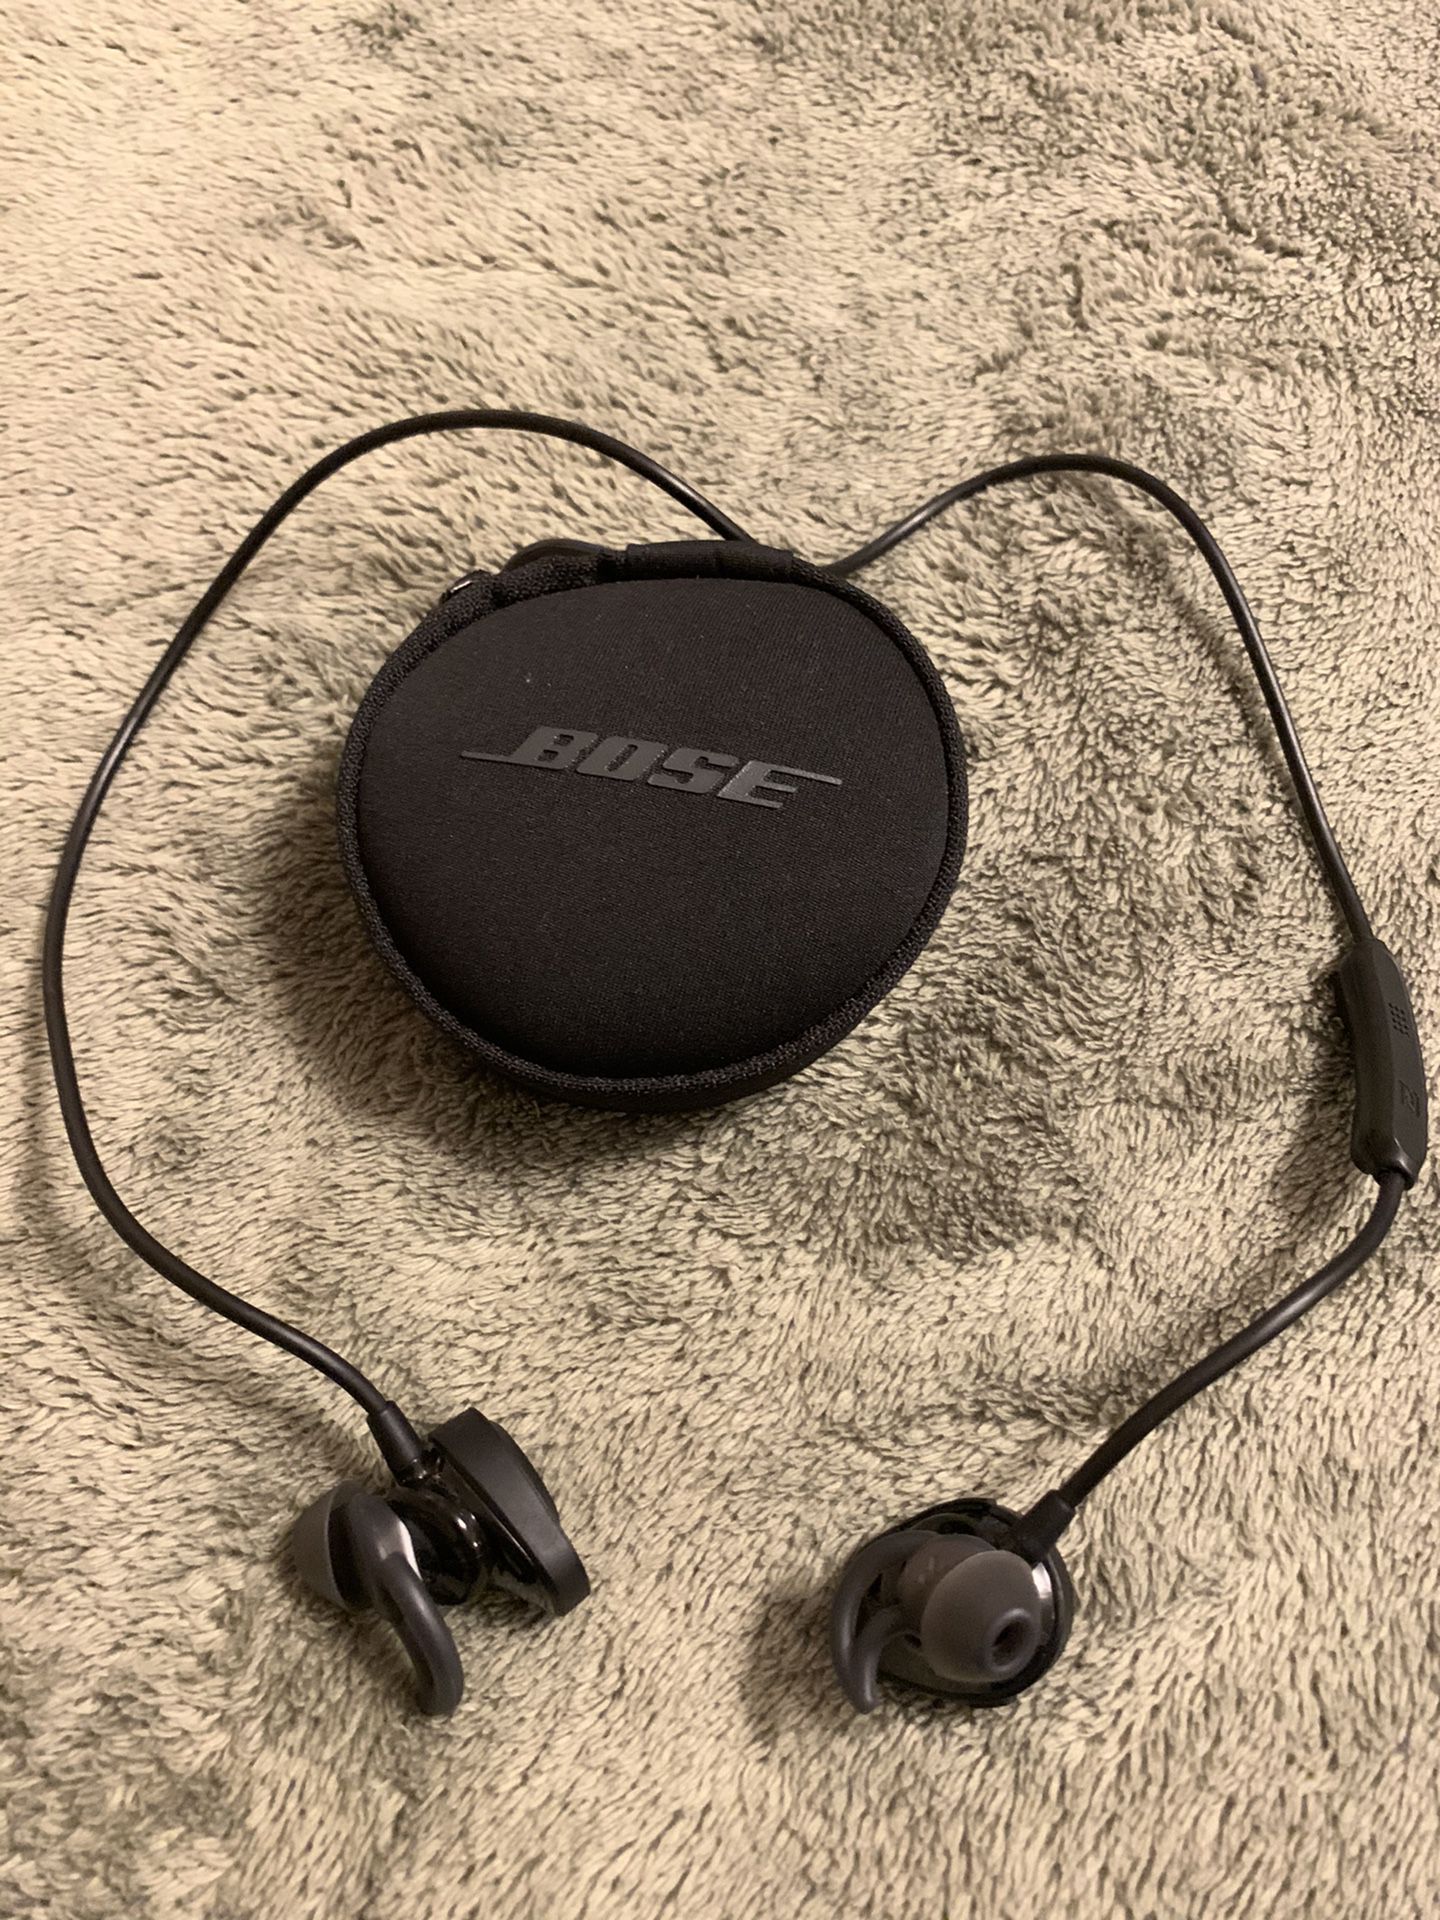 Bose Soundsport headphones